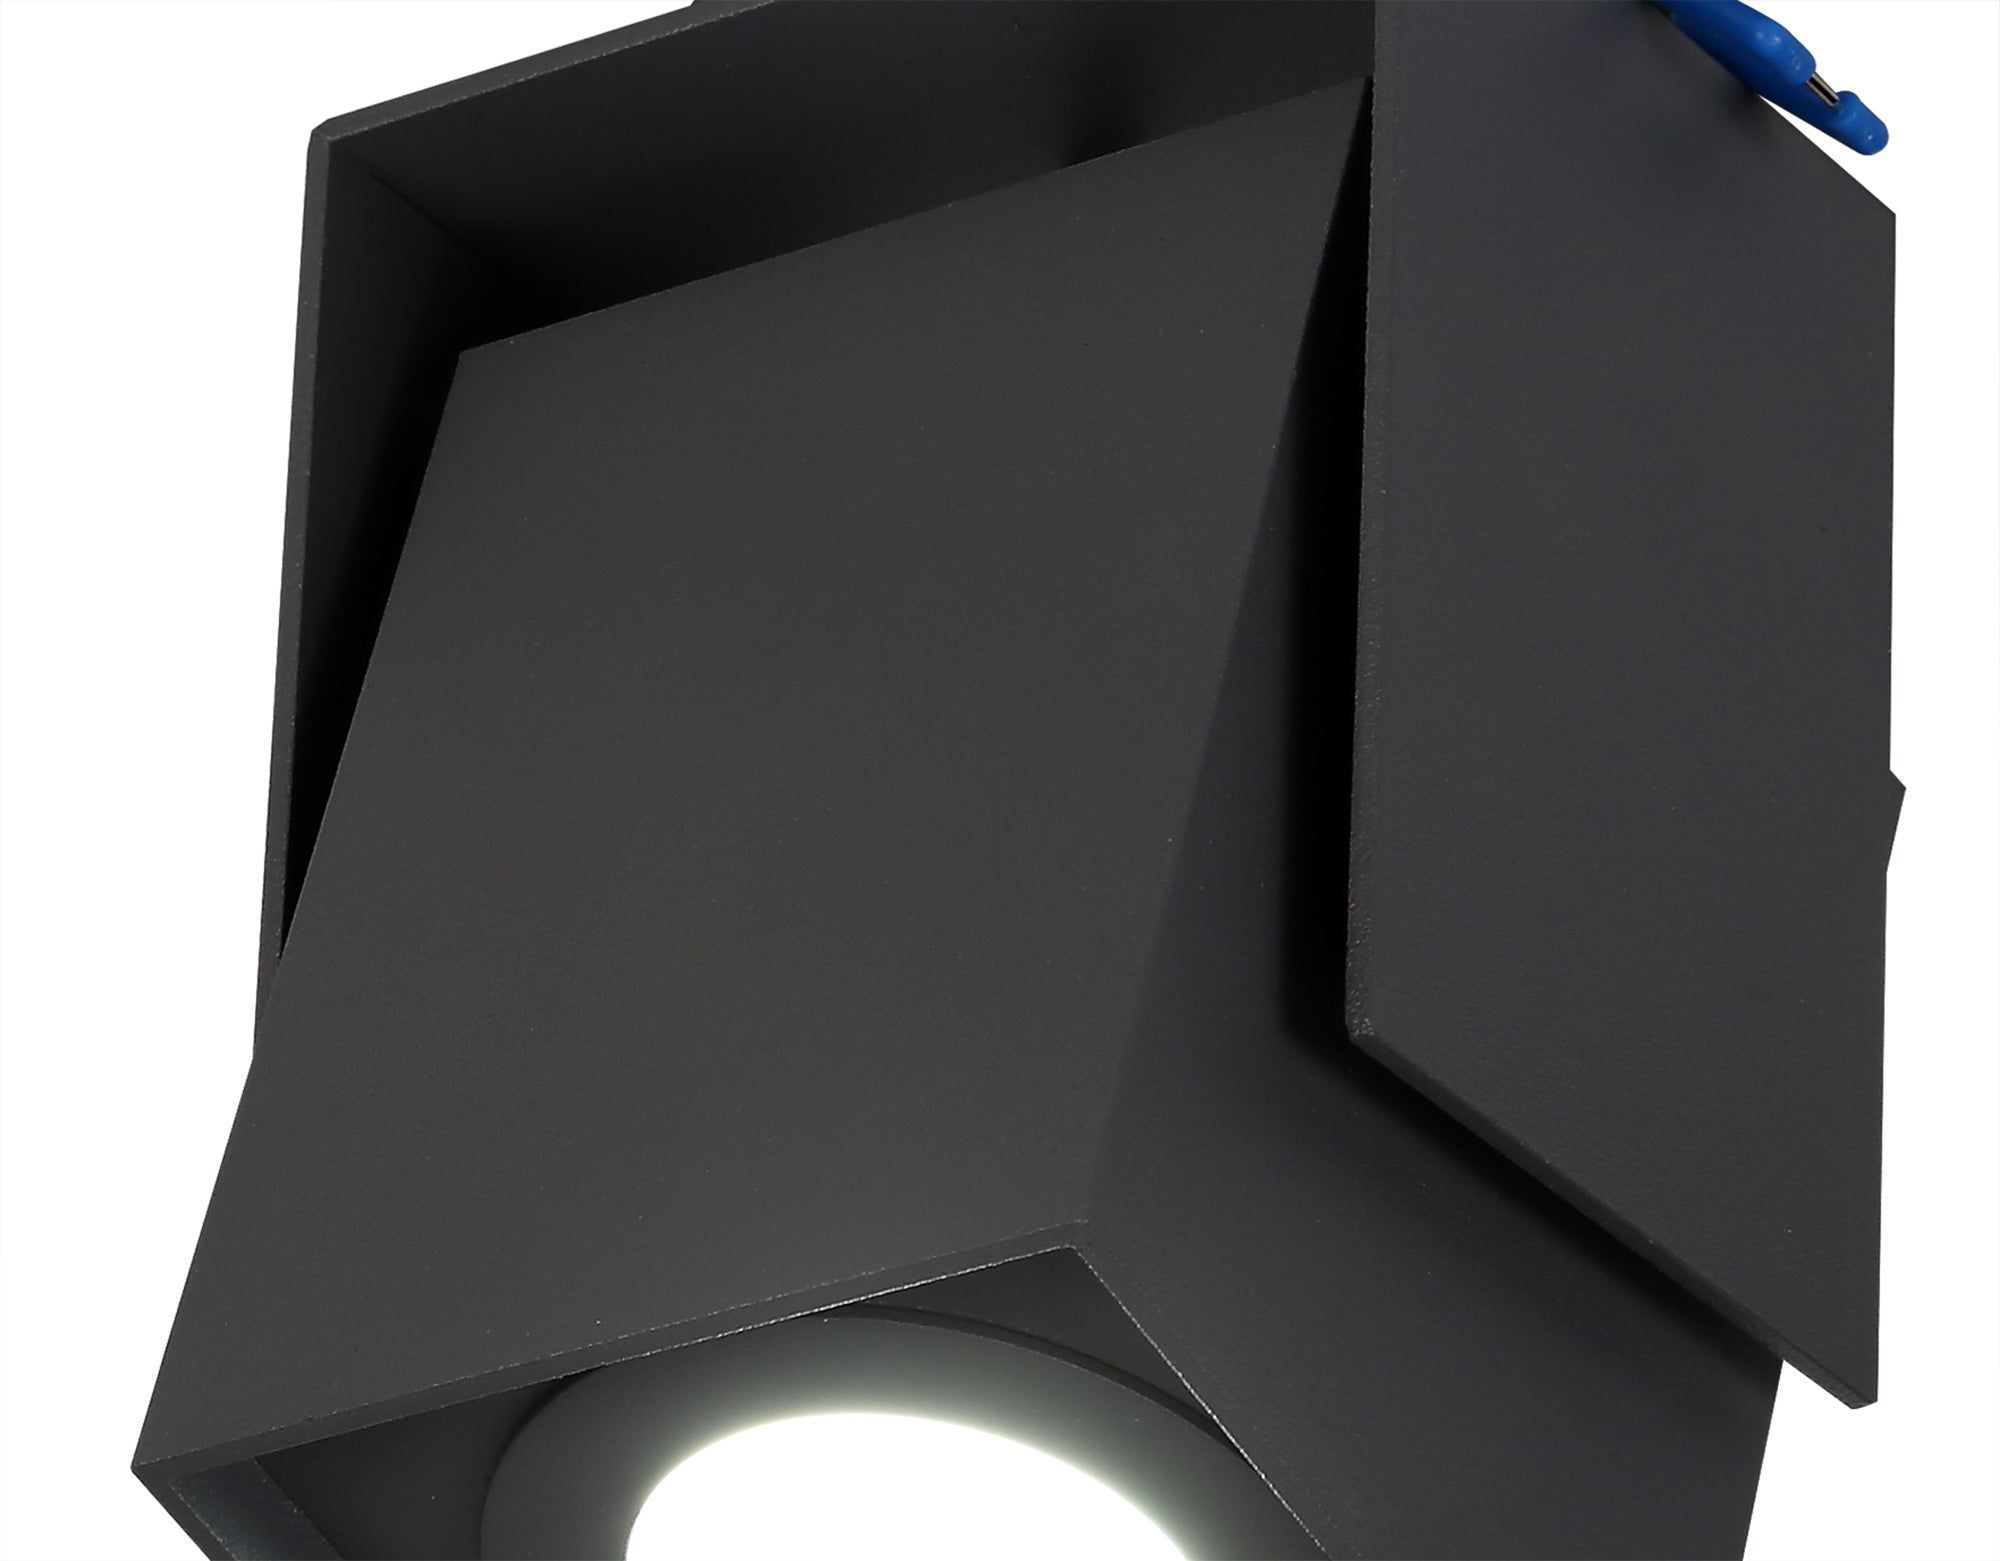 Litingzen Adjustable Square Spotlight, 1 Light GU10, Sand Anthracite,Sand White Cut Out: 62mm